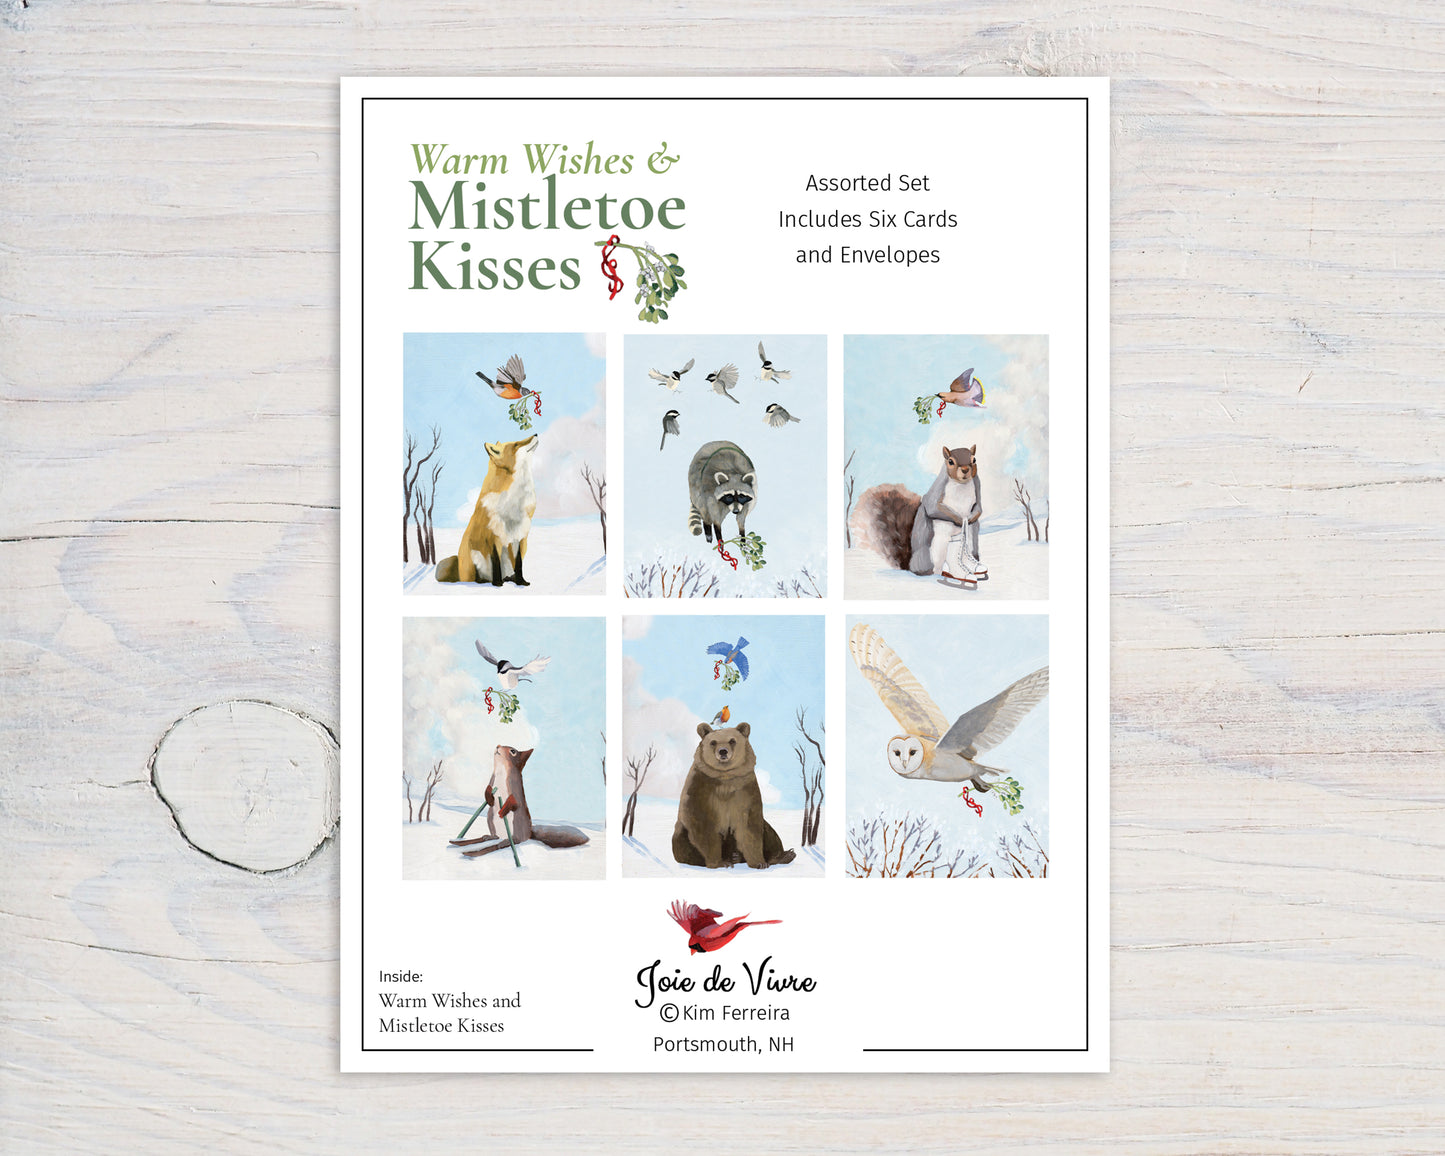 Mistletoe - Box Set of Holiday Cards